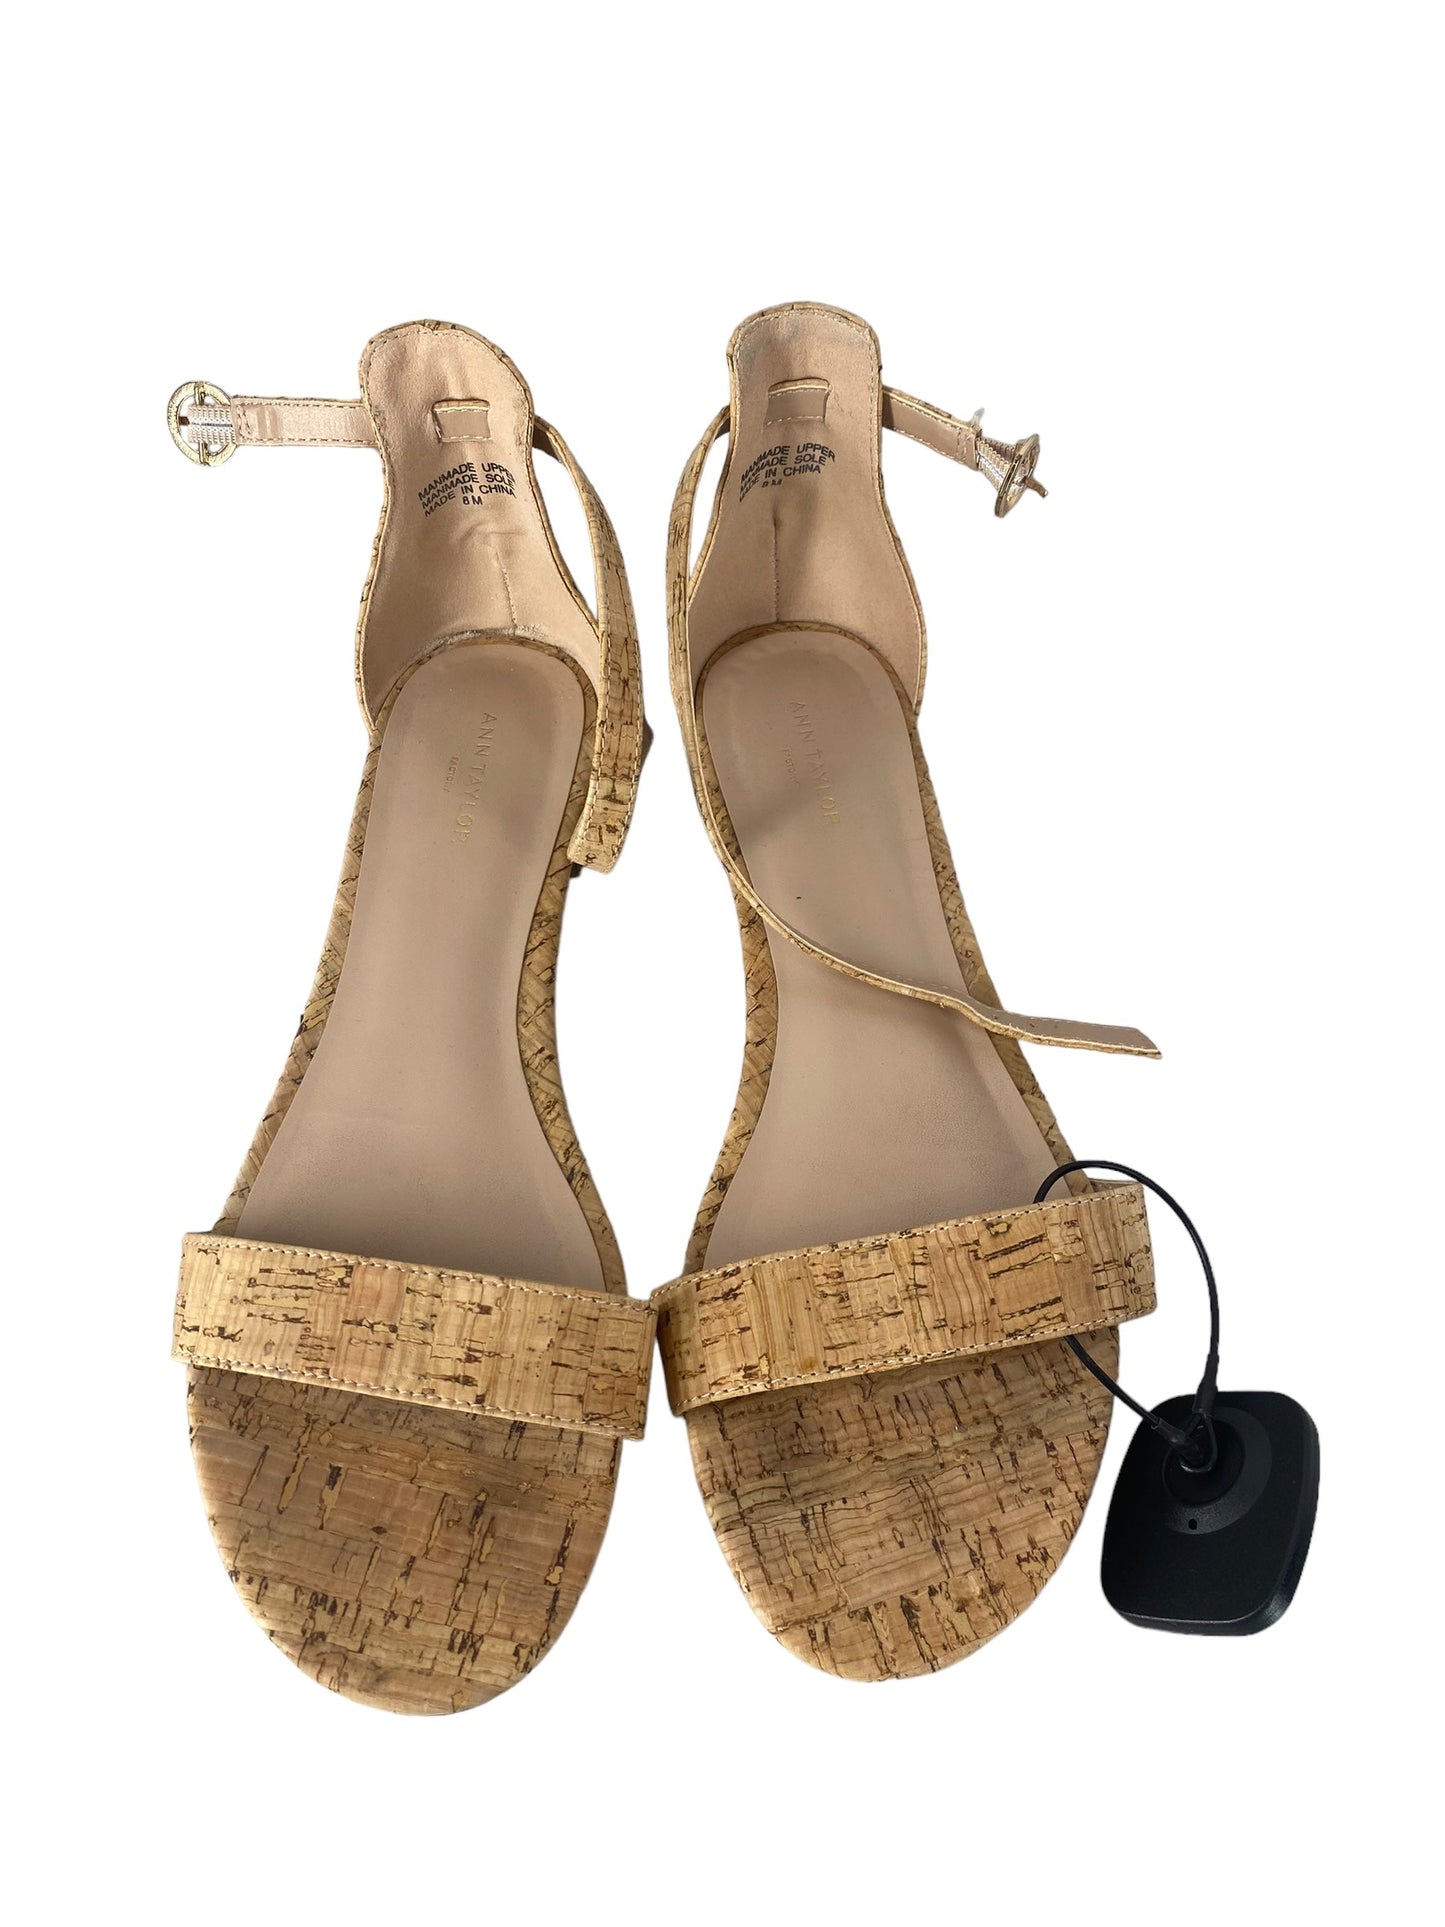 Tan Sandals Flats Ann Taylor, Size 8